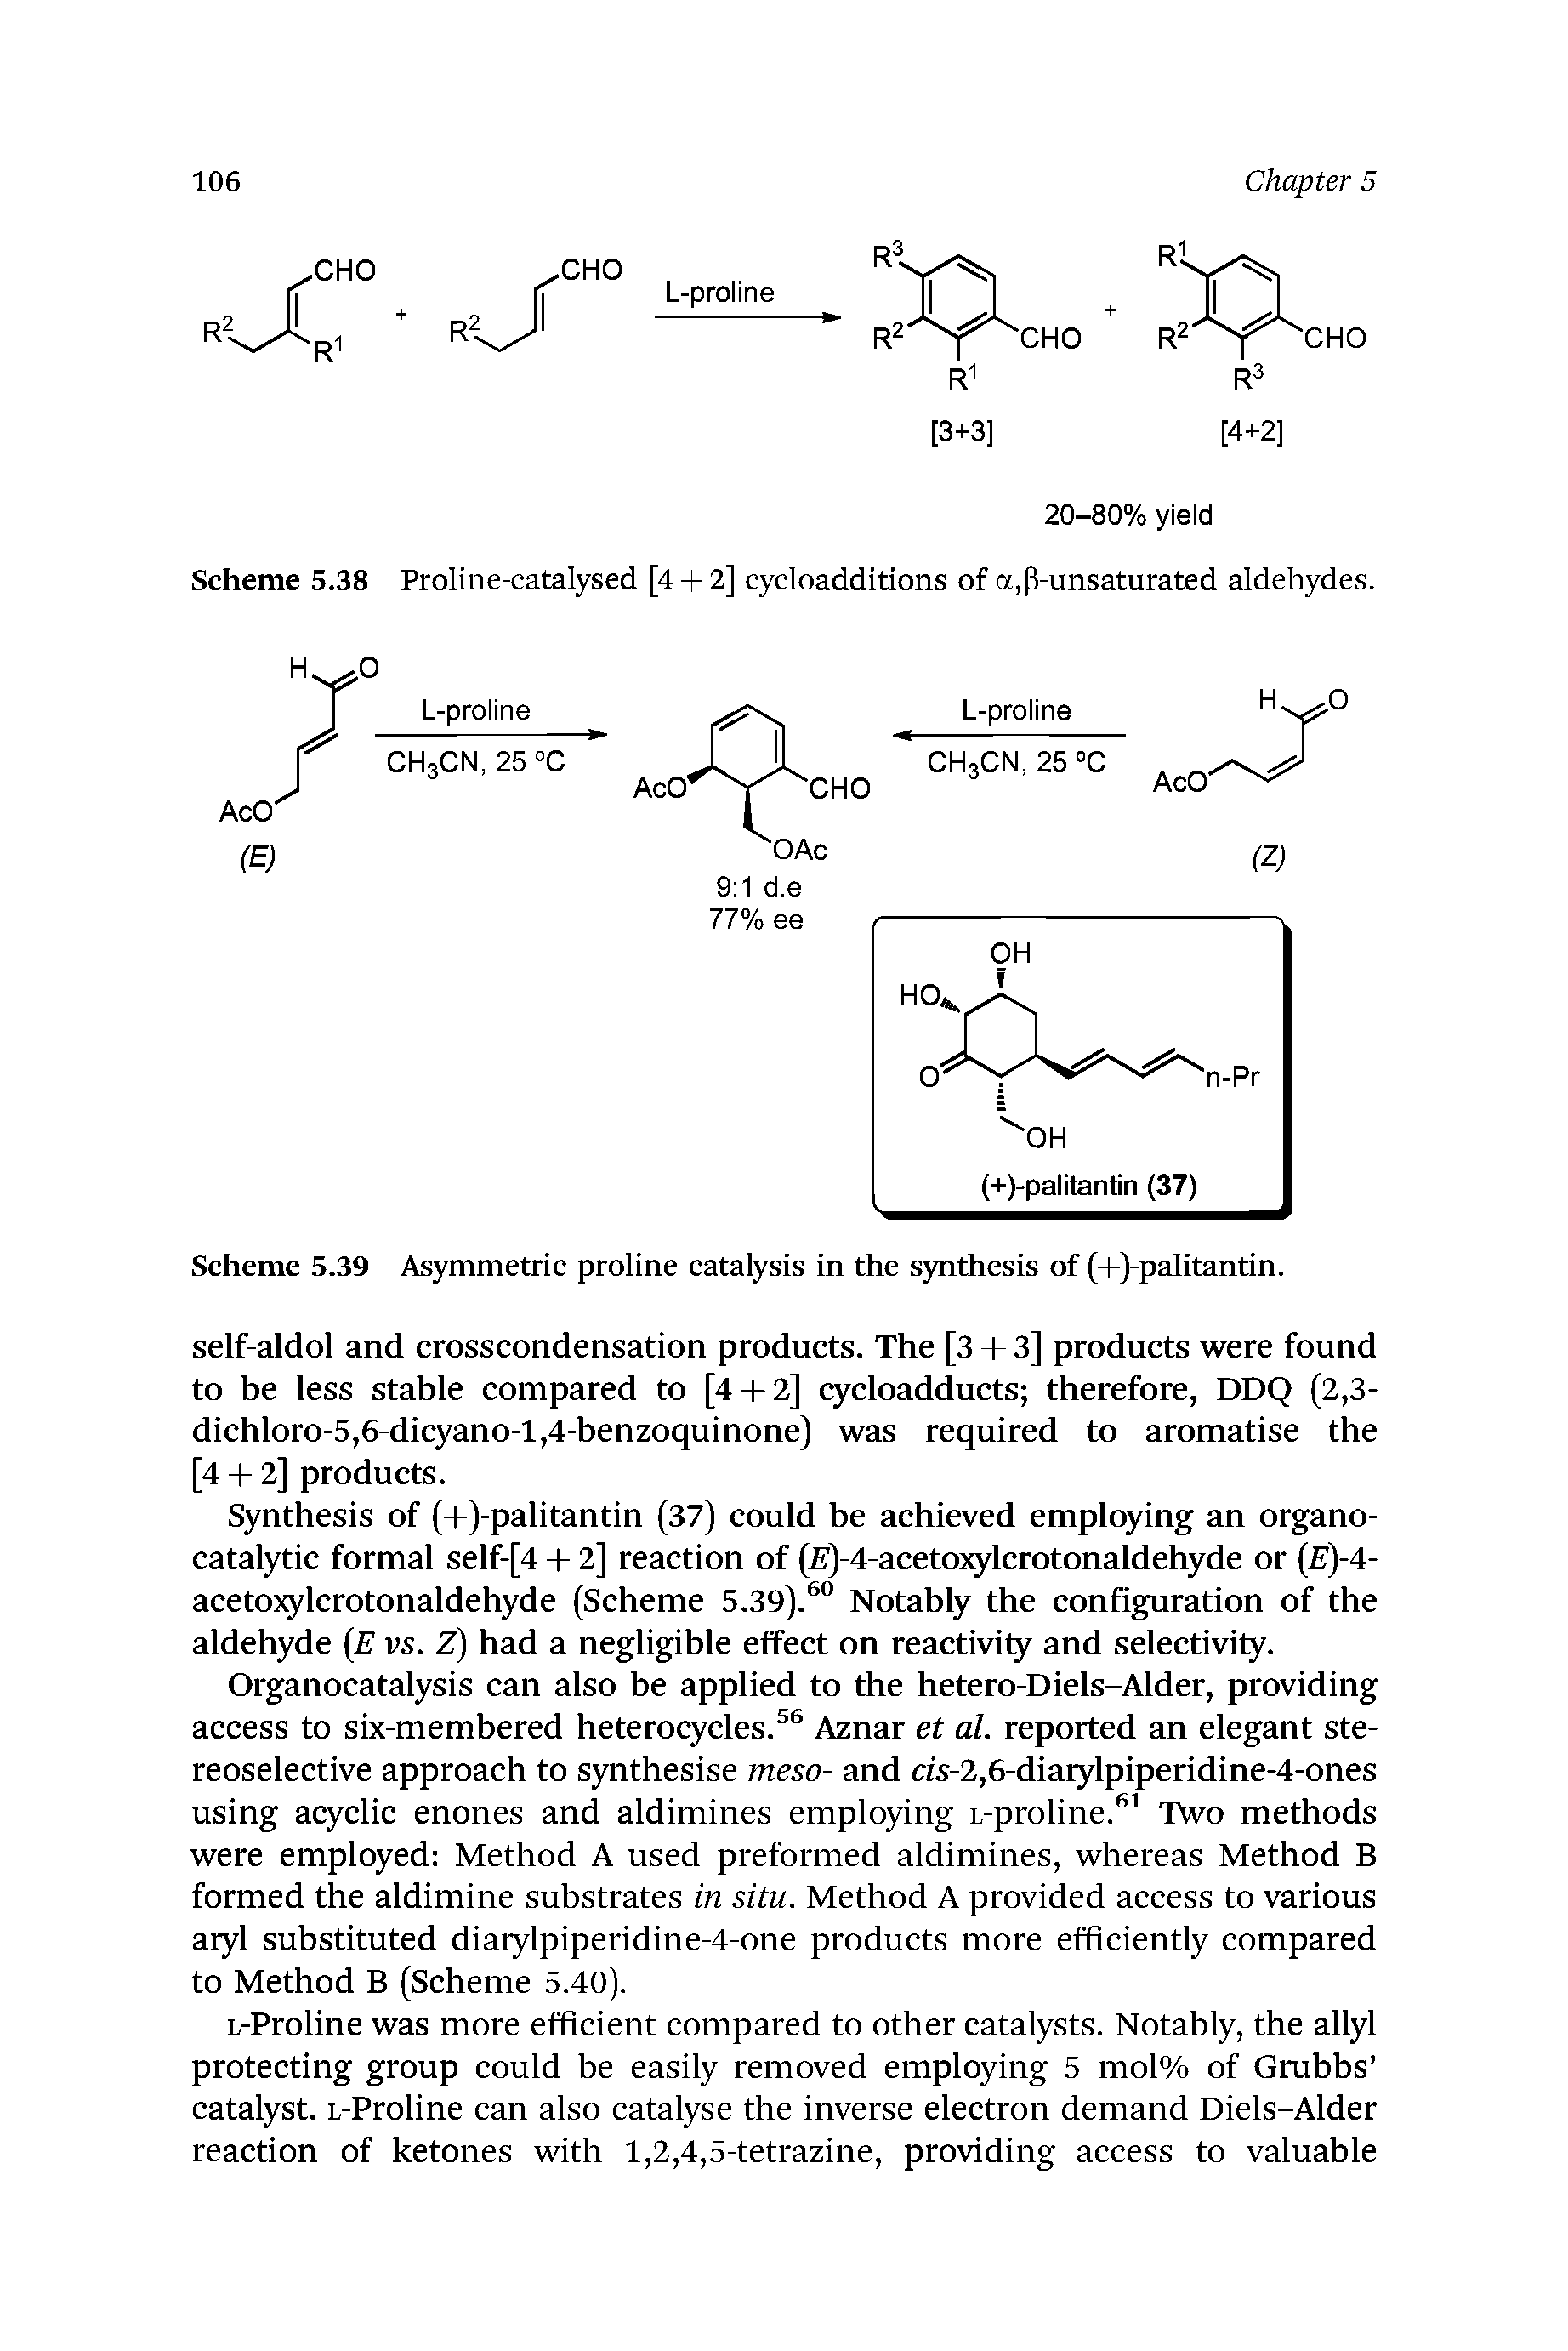 Scheme 5.39 Asymmetric proline catalysis in the s5mthesis of (+)-palitantin.